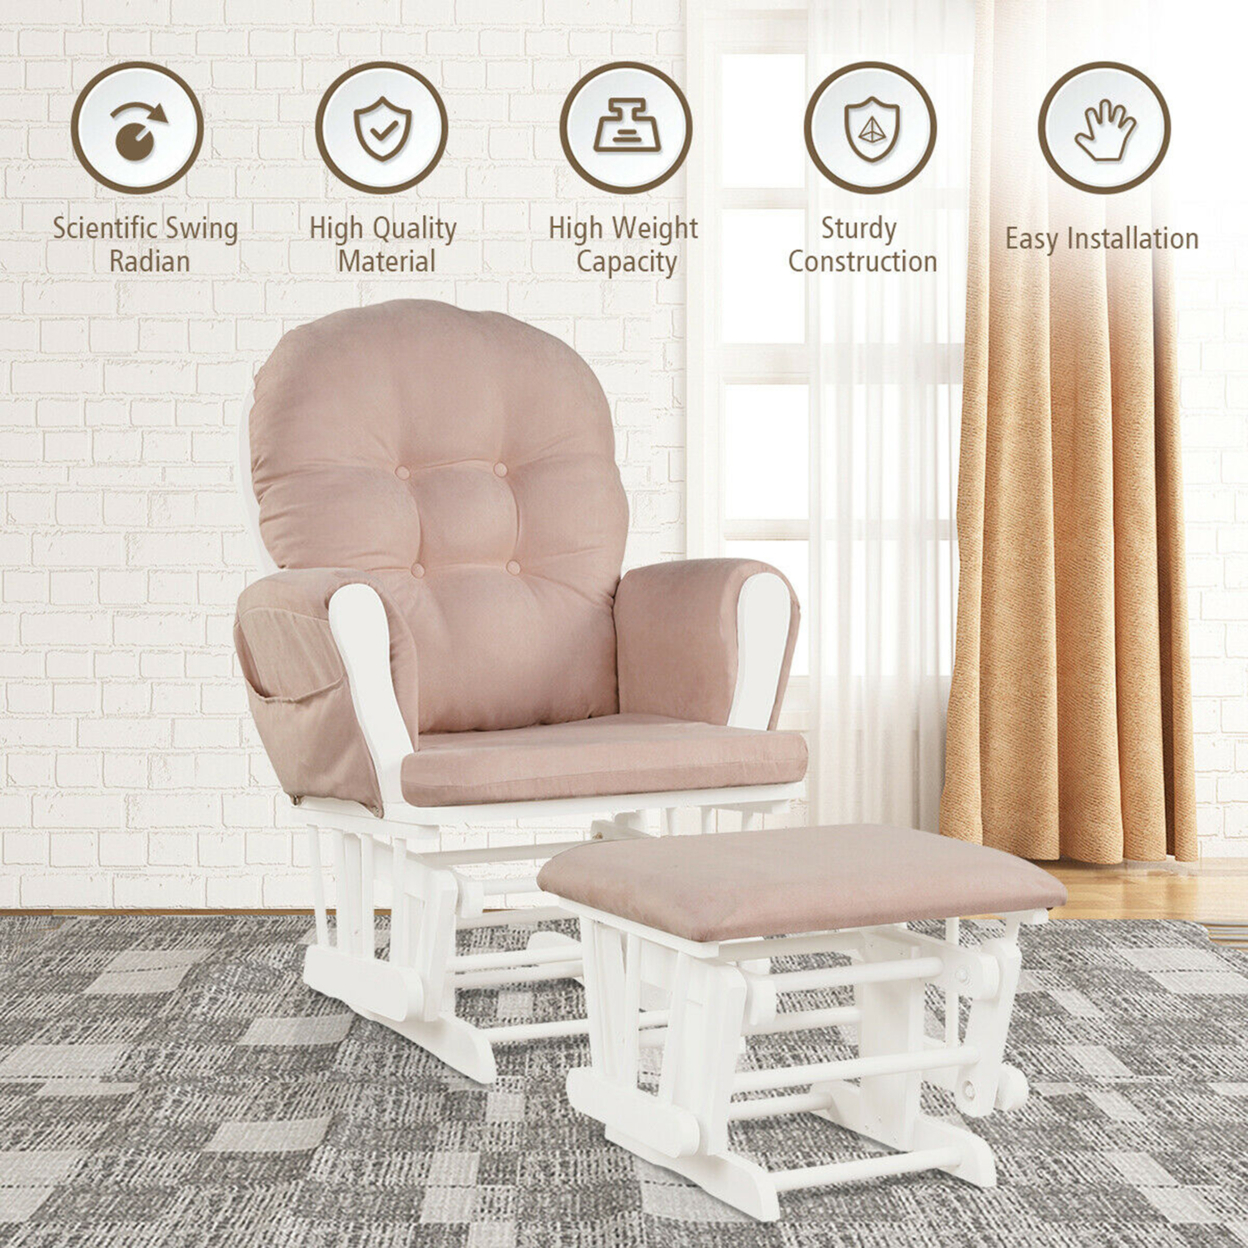 Baby Nursery Relax Rocker Rocking Chair Glider & Ottoman Set W/ Cushion - Light Grey